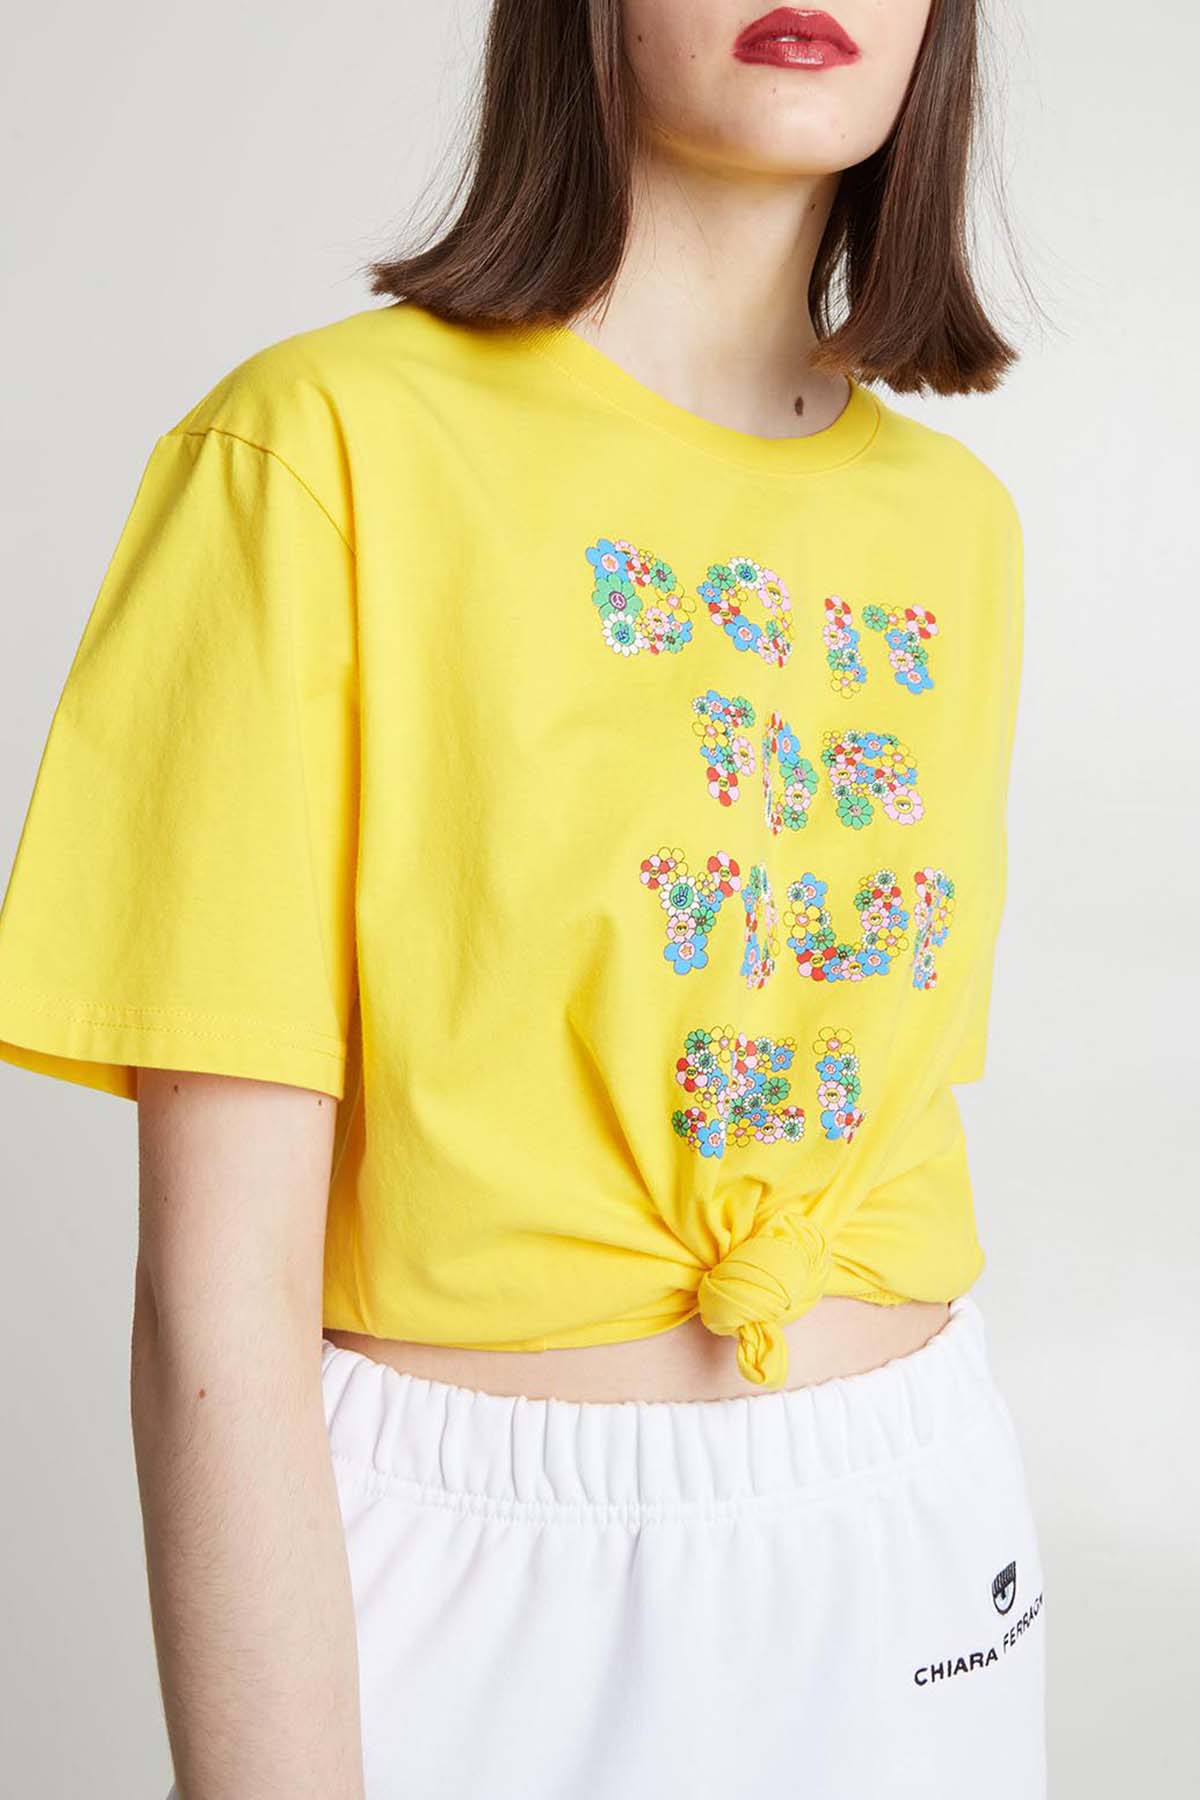 Chiara Ferragni Yuvarlak Yaka Yazılı T-shirt